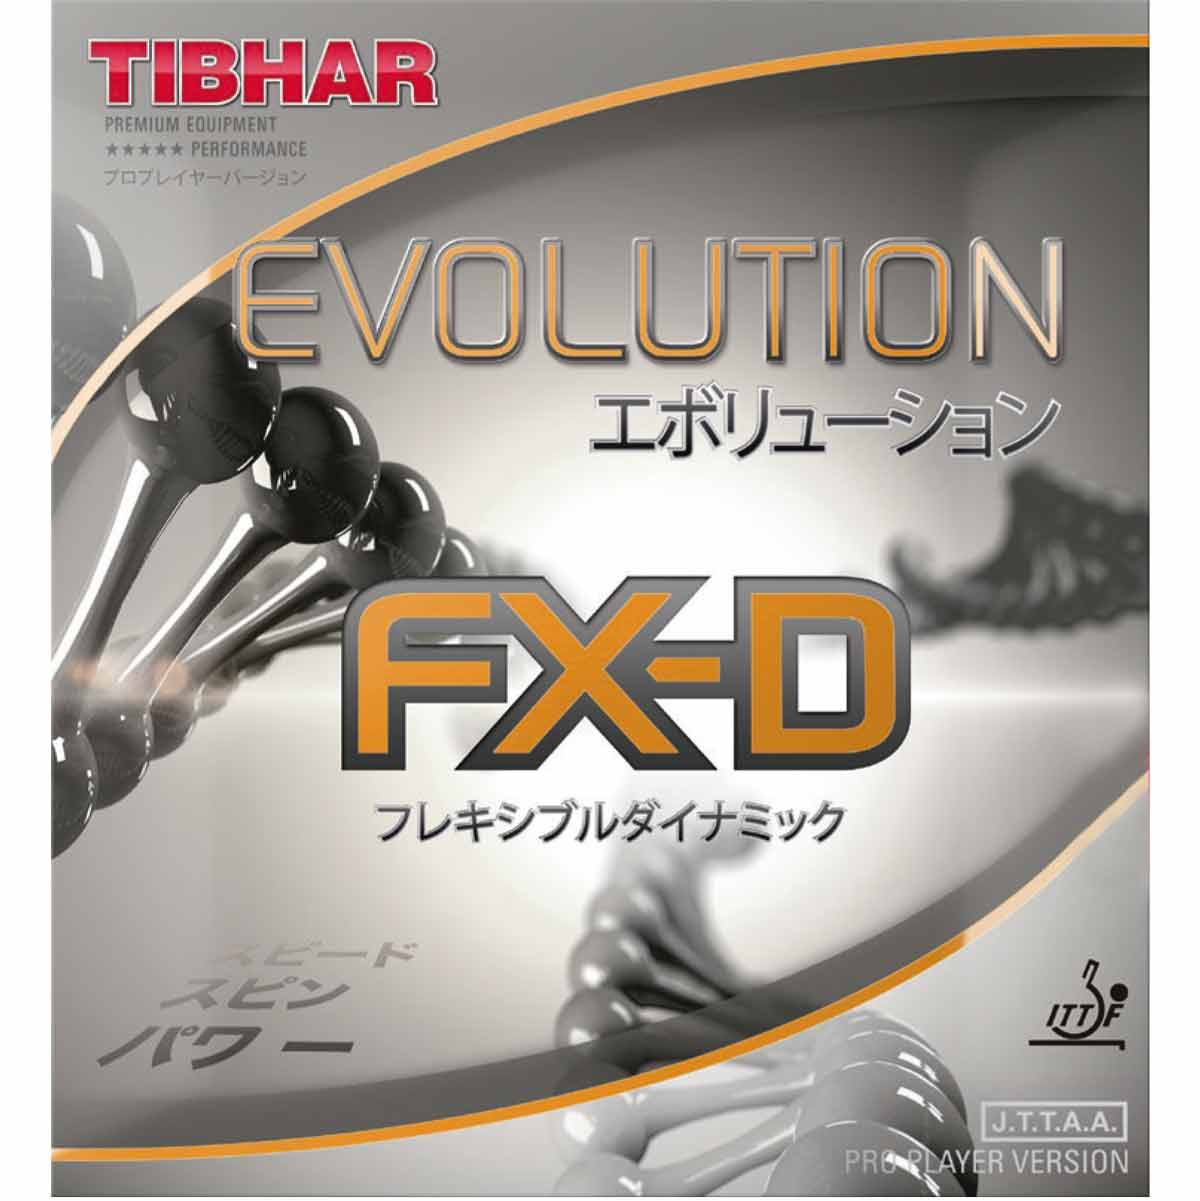 Накладка TIBHAR Evolution FX-D